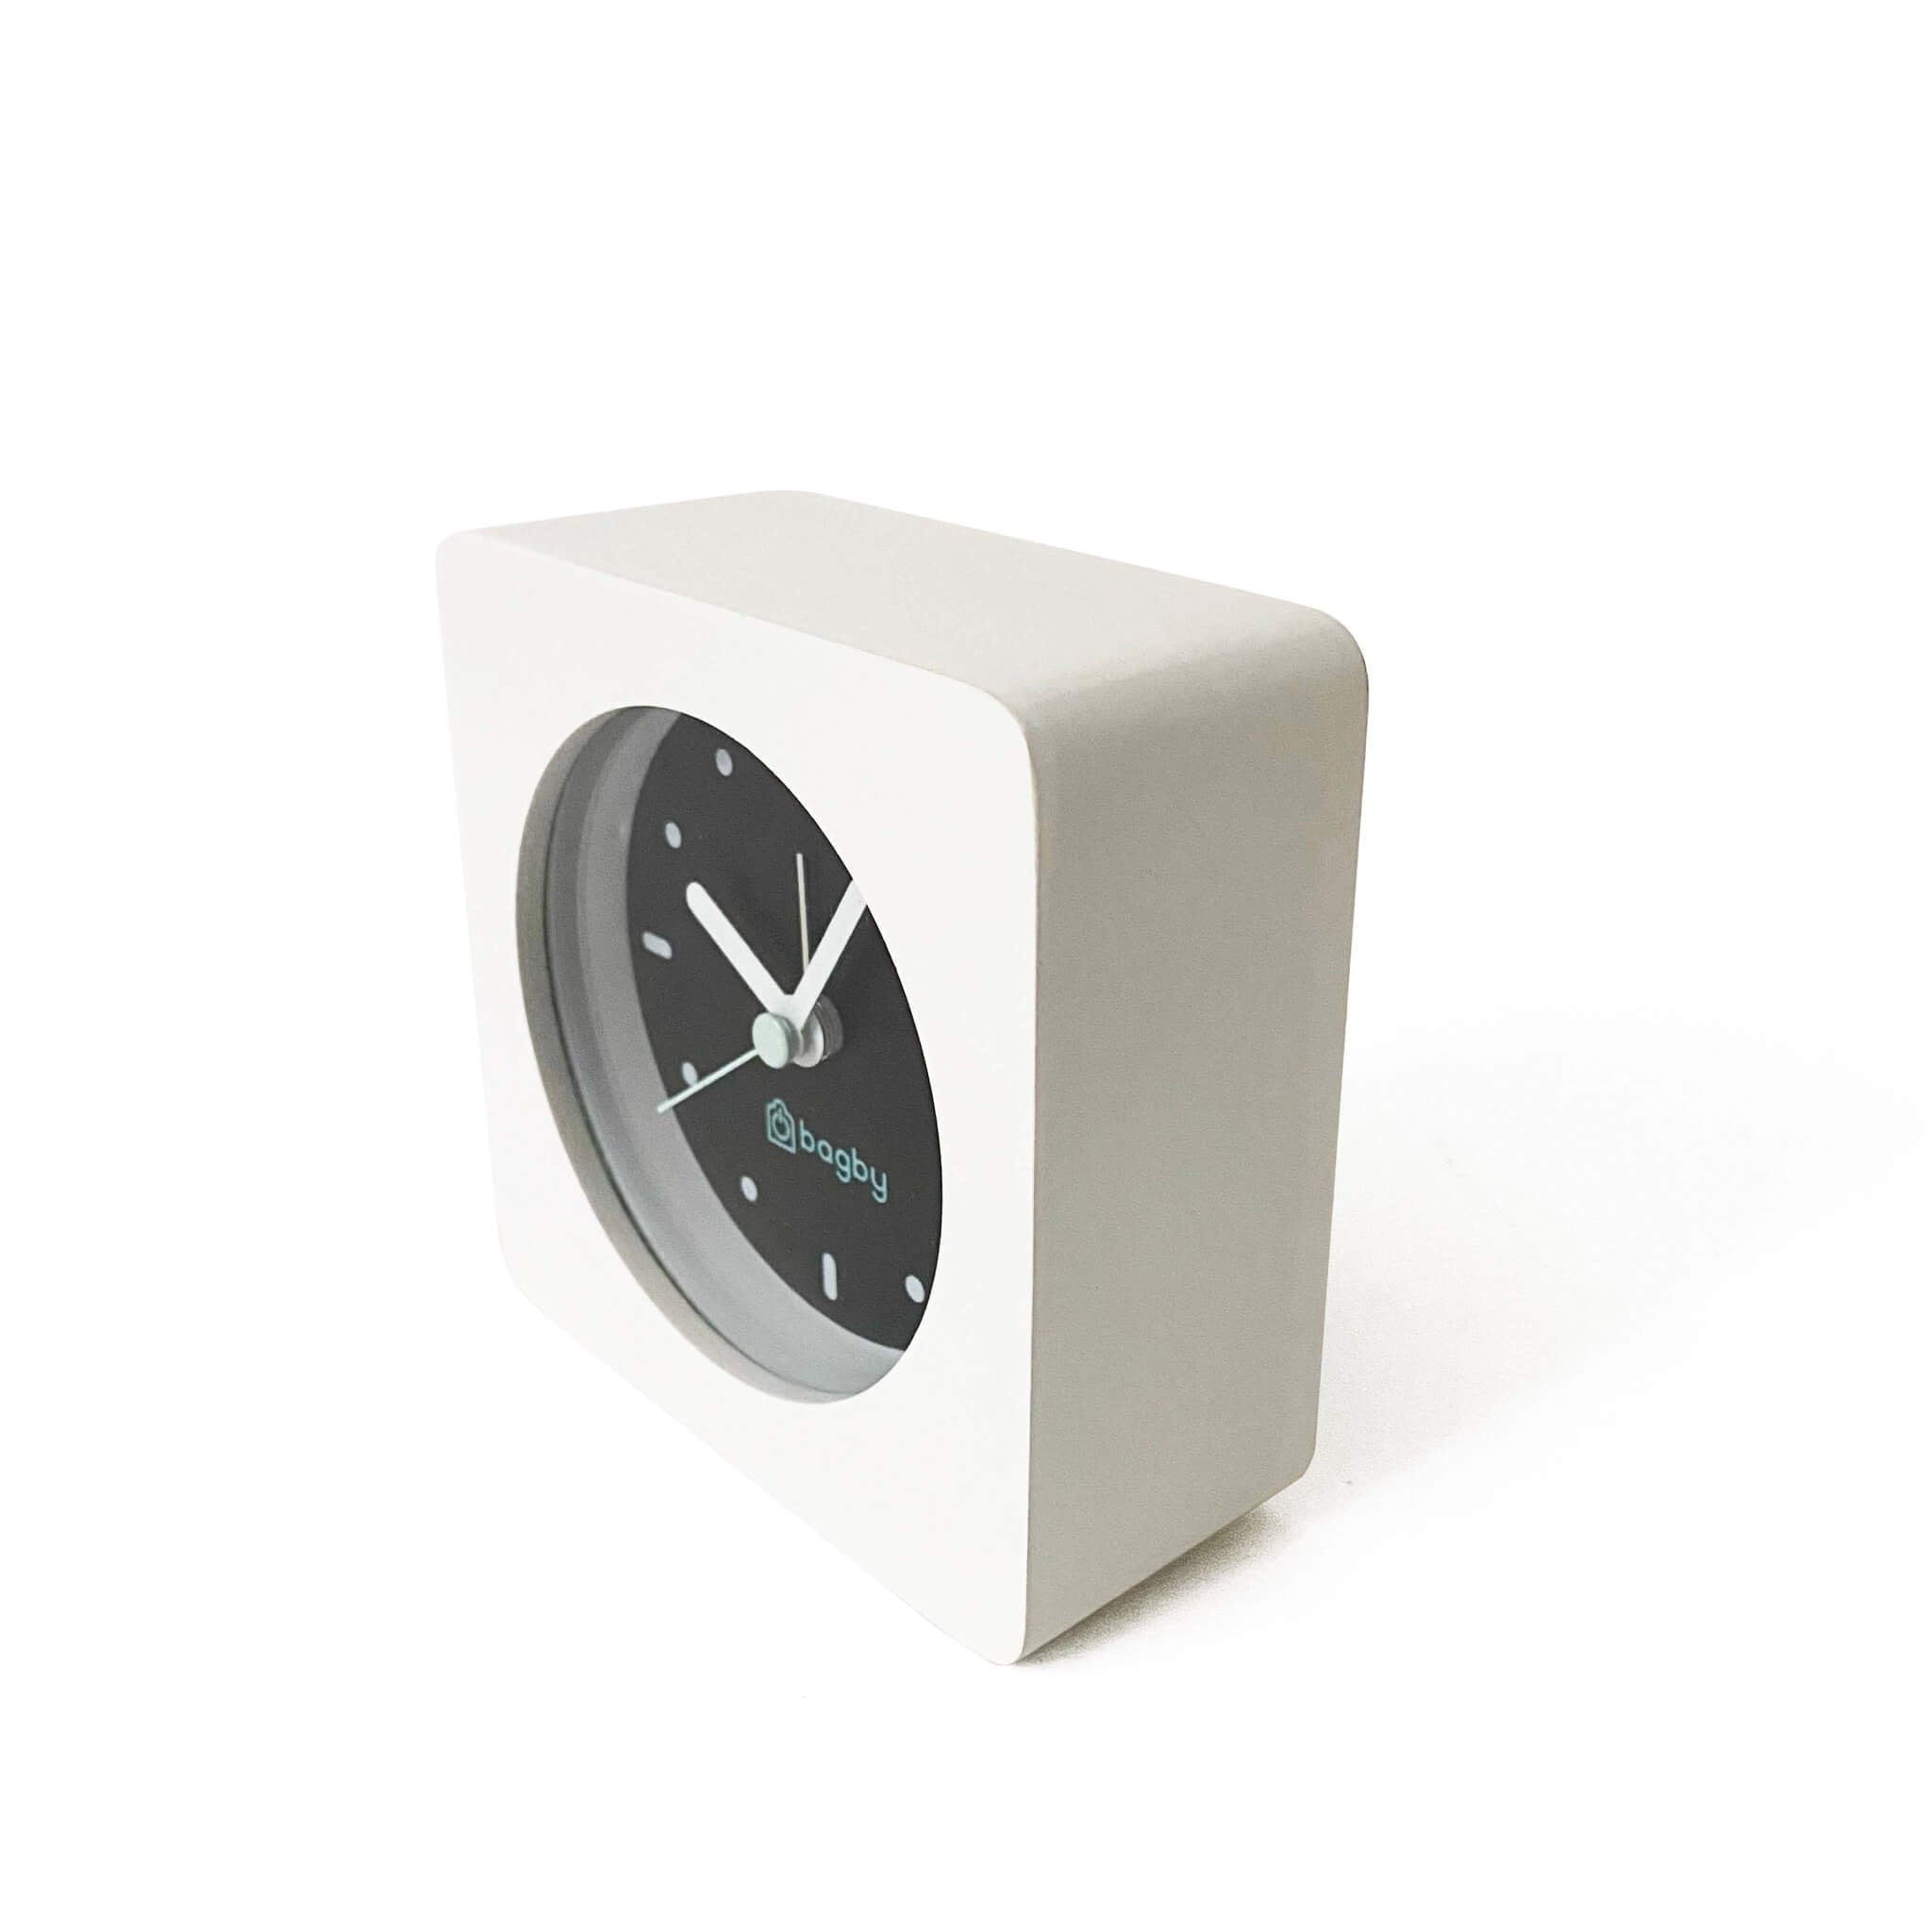 Minimalist Silent Digital-Free Alarm Clock White